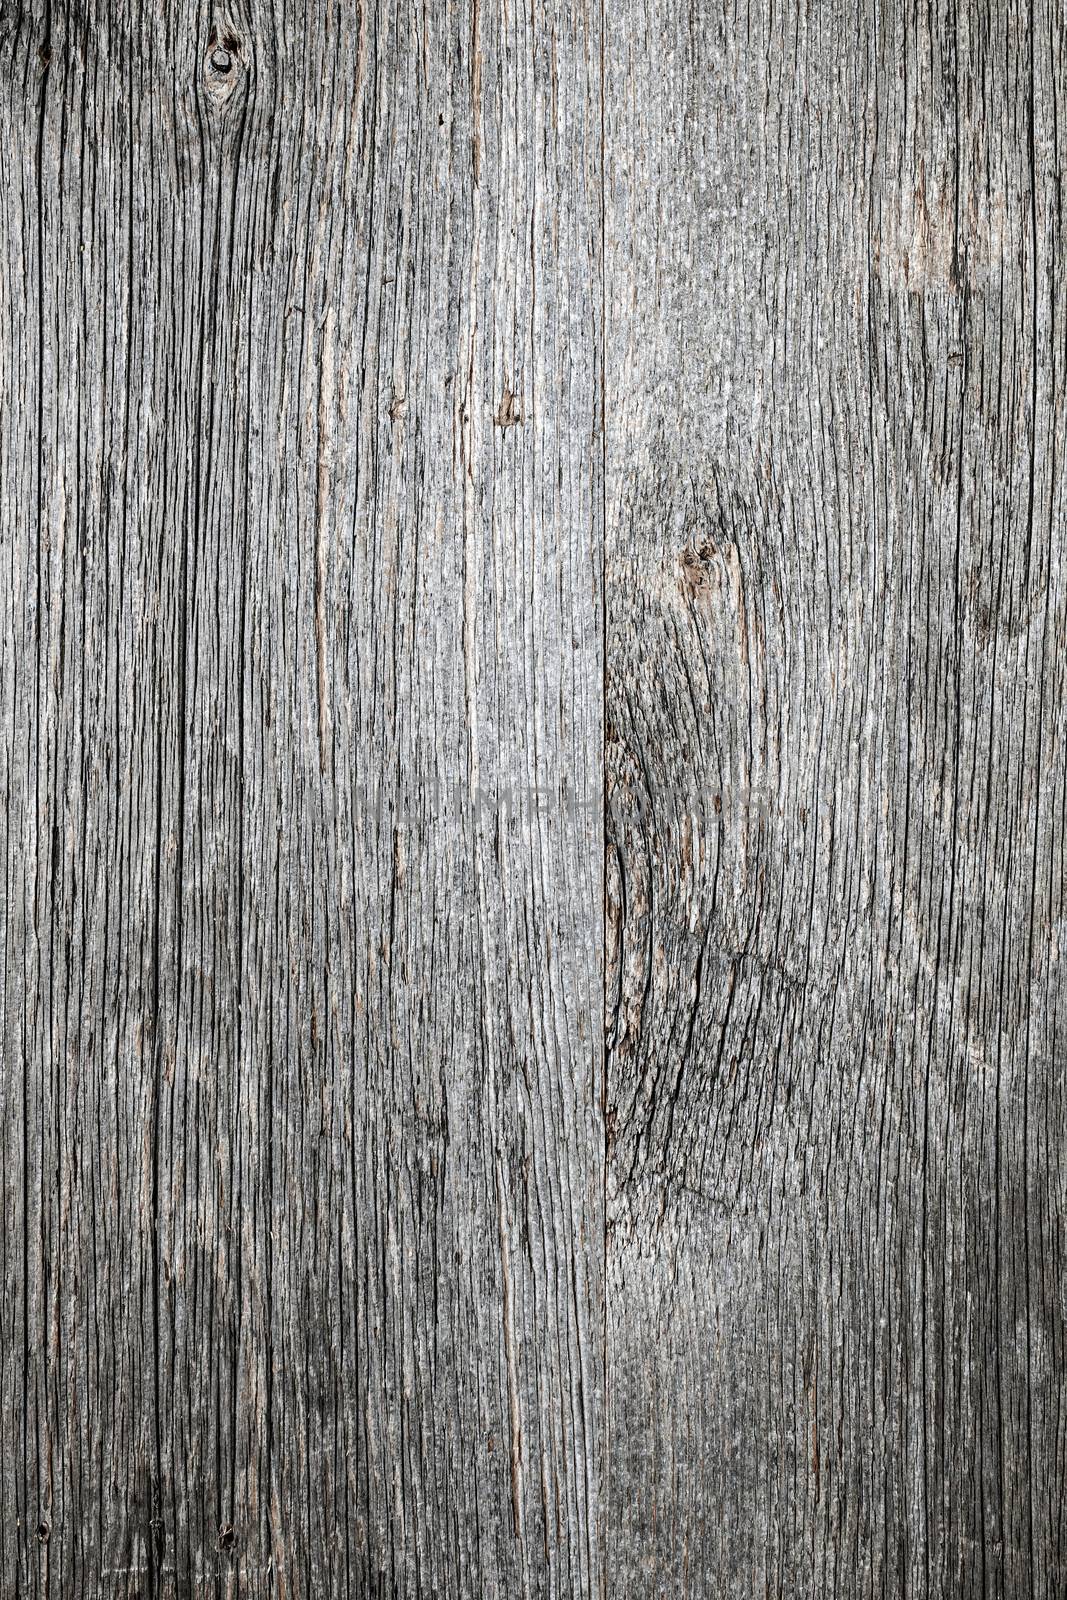 Old barn wood background by elenathewise